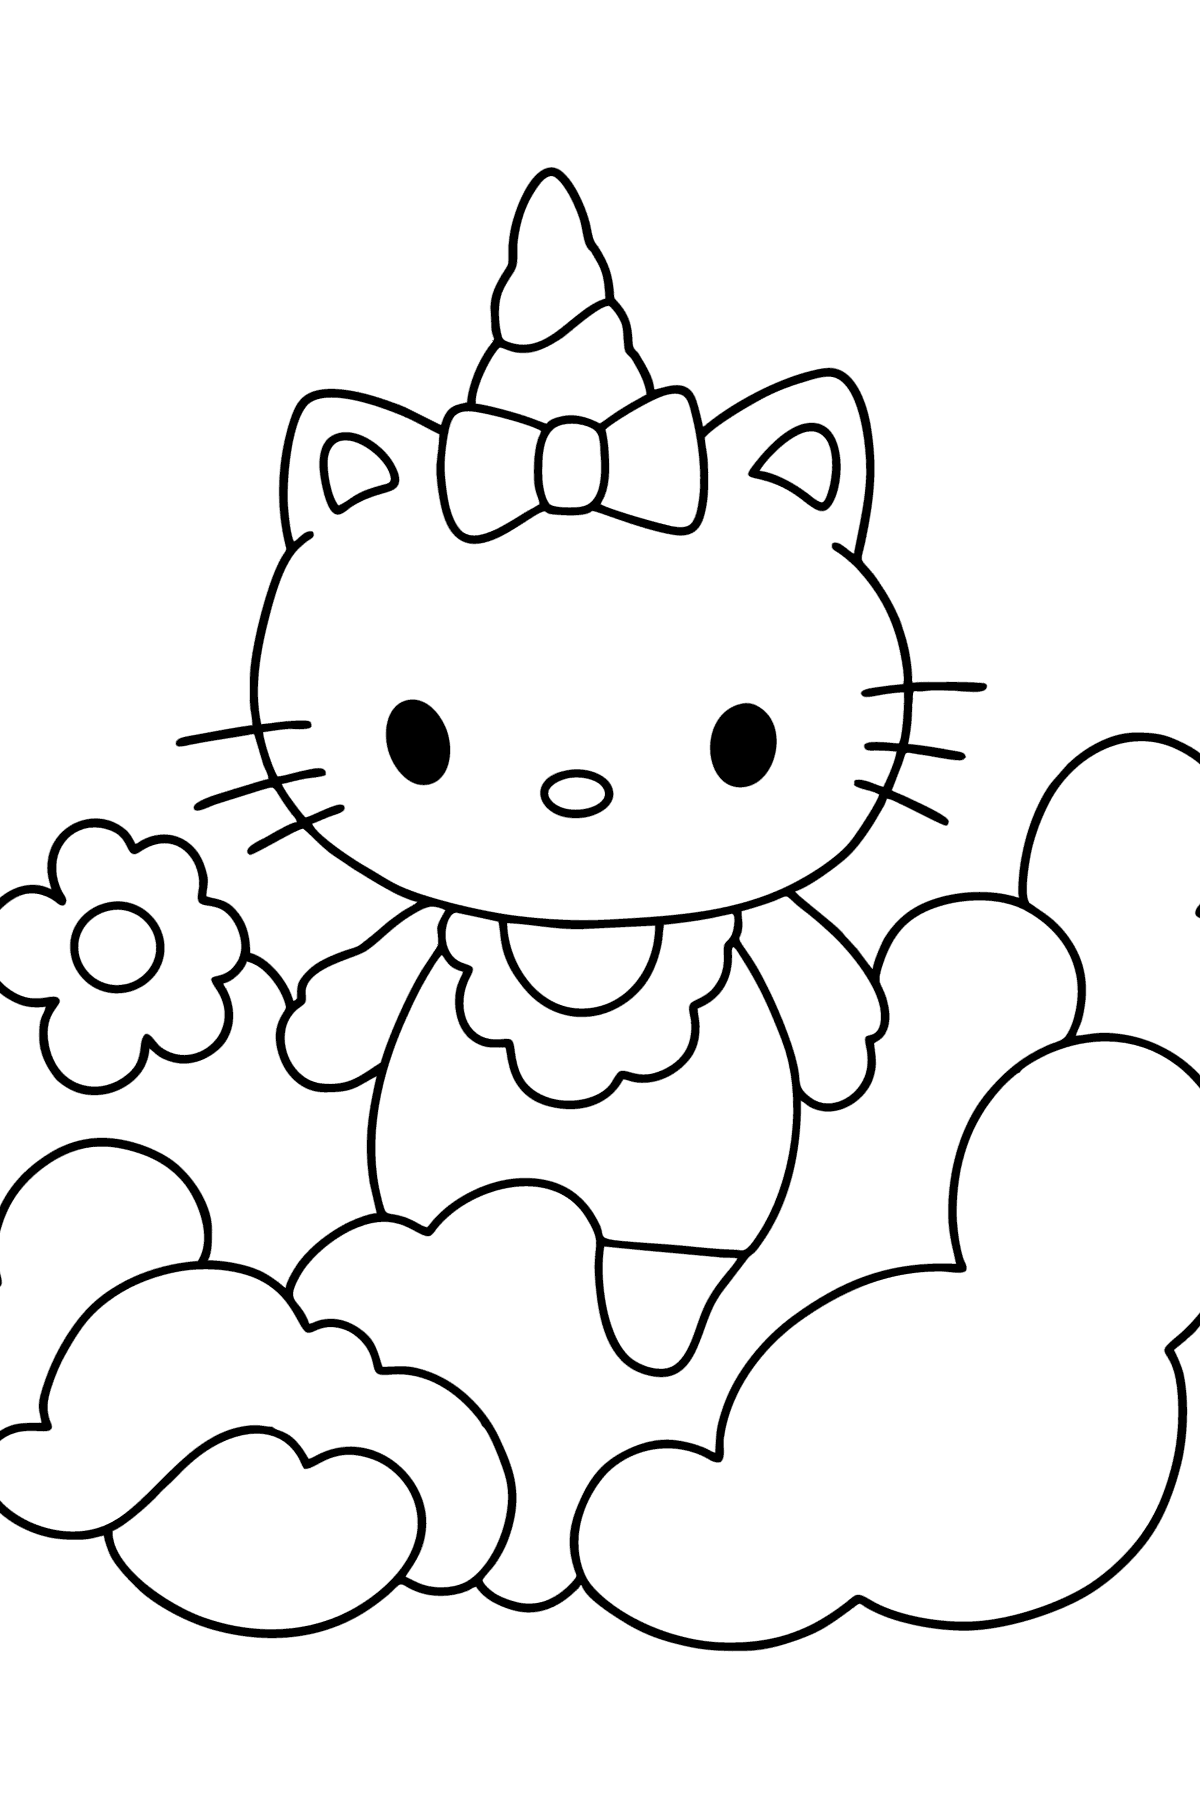 Desen de colorat Hello Kitty inorog - Desene de colorat pentru copii